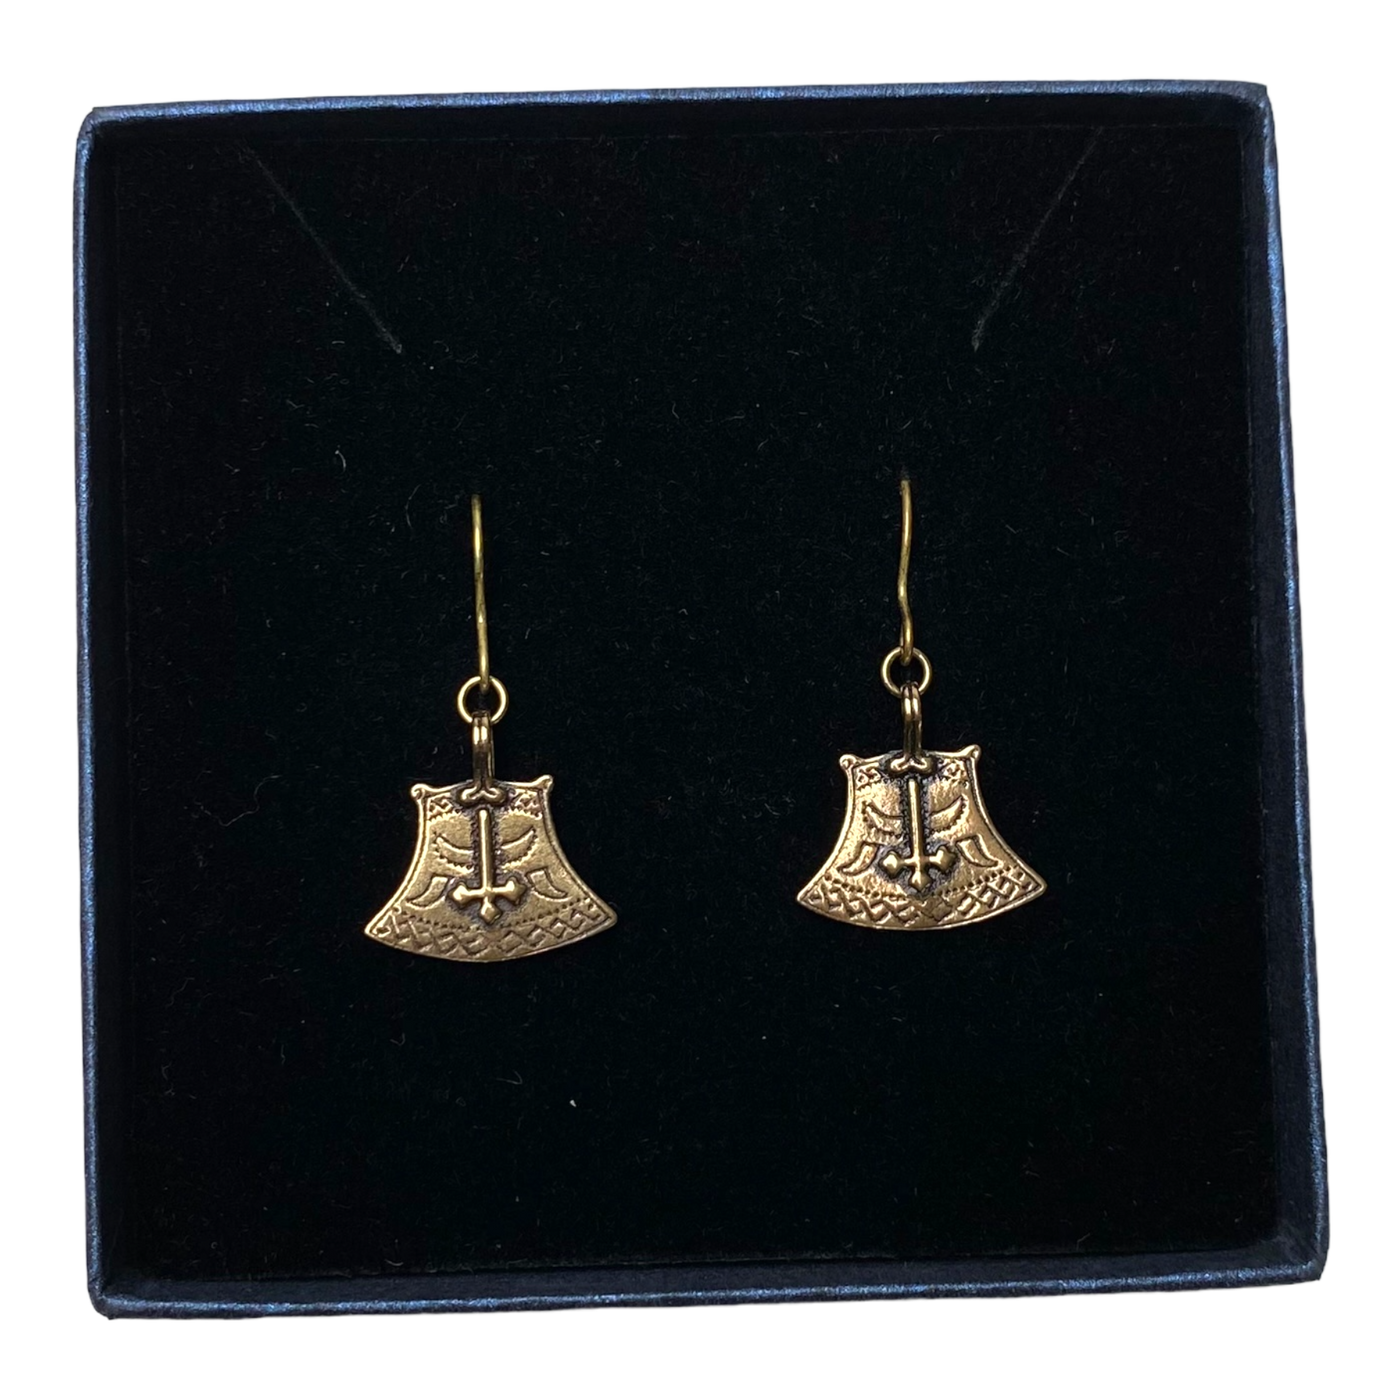 Kalevala Koru Kuusamon kirves earrings, bronze